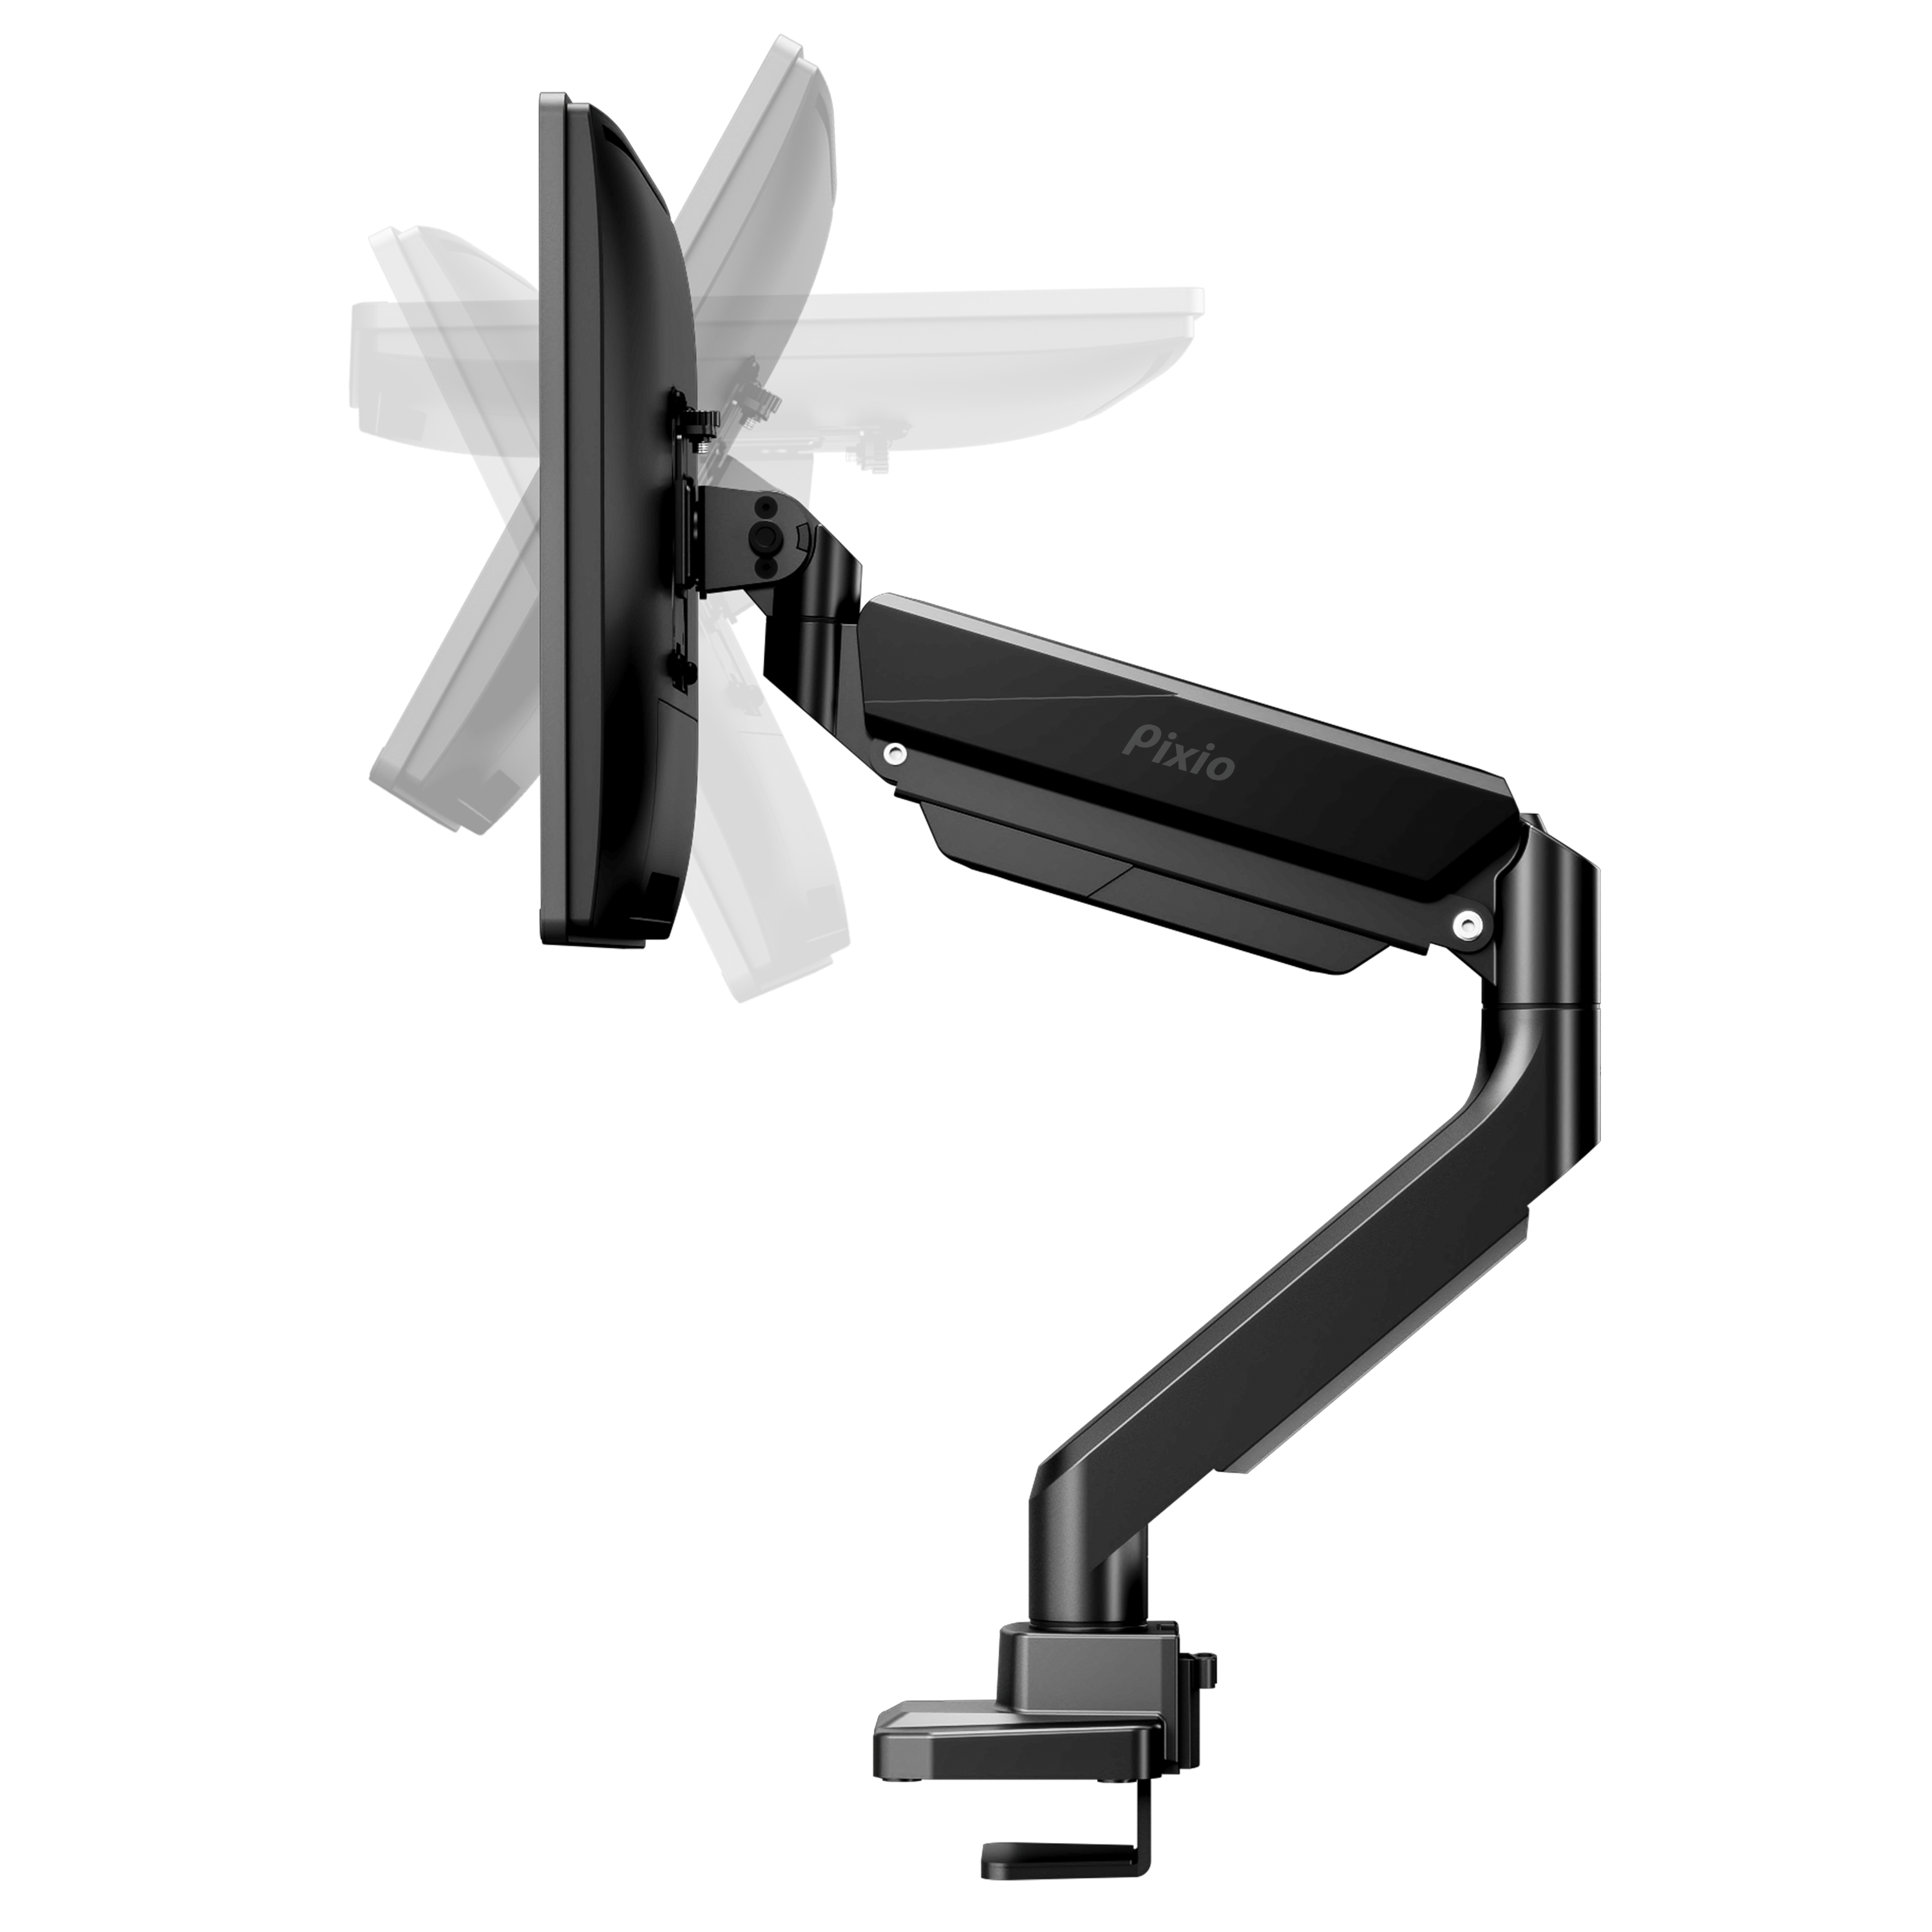 PS2S Heavy-Duty Single Monitor Arm Mount